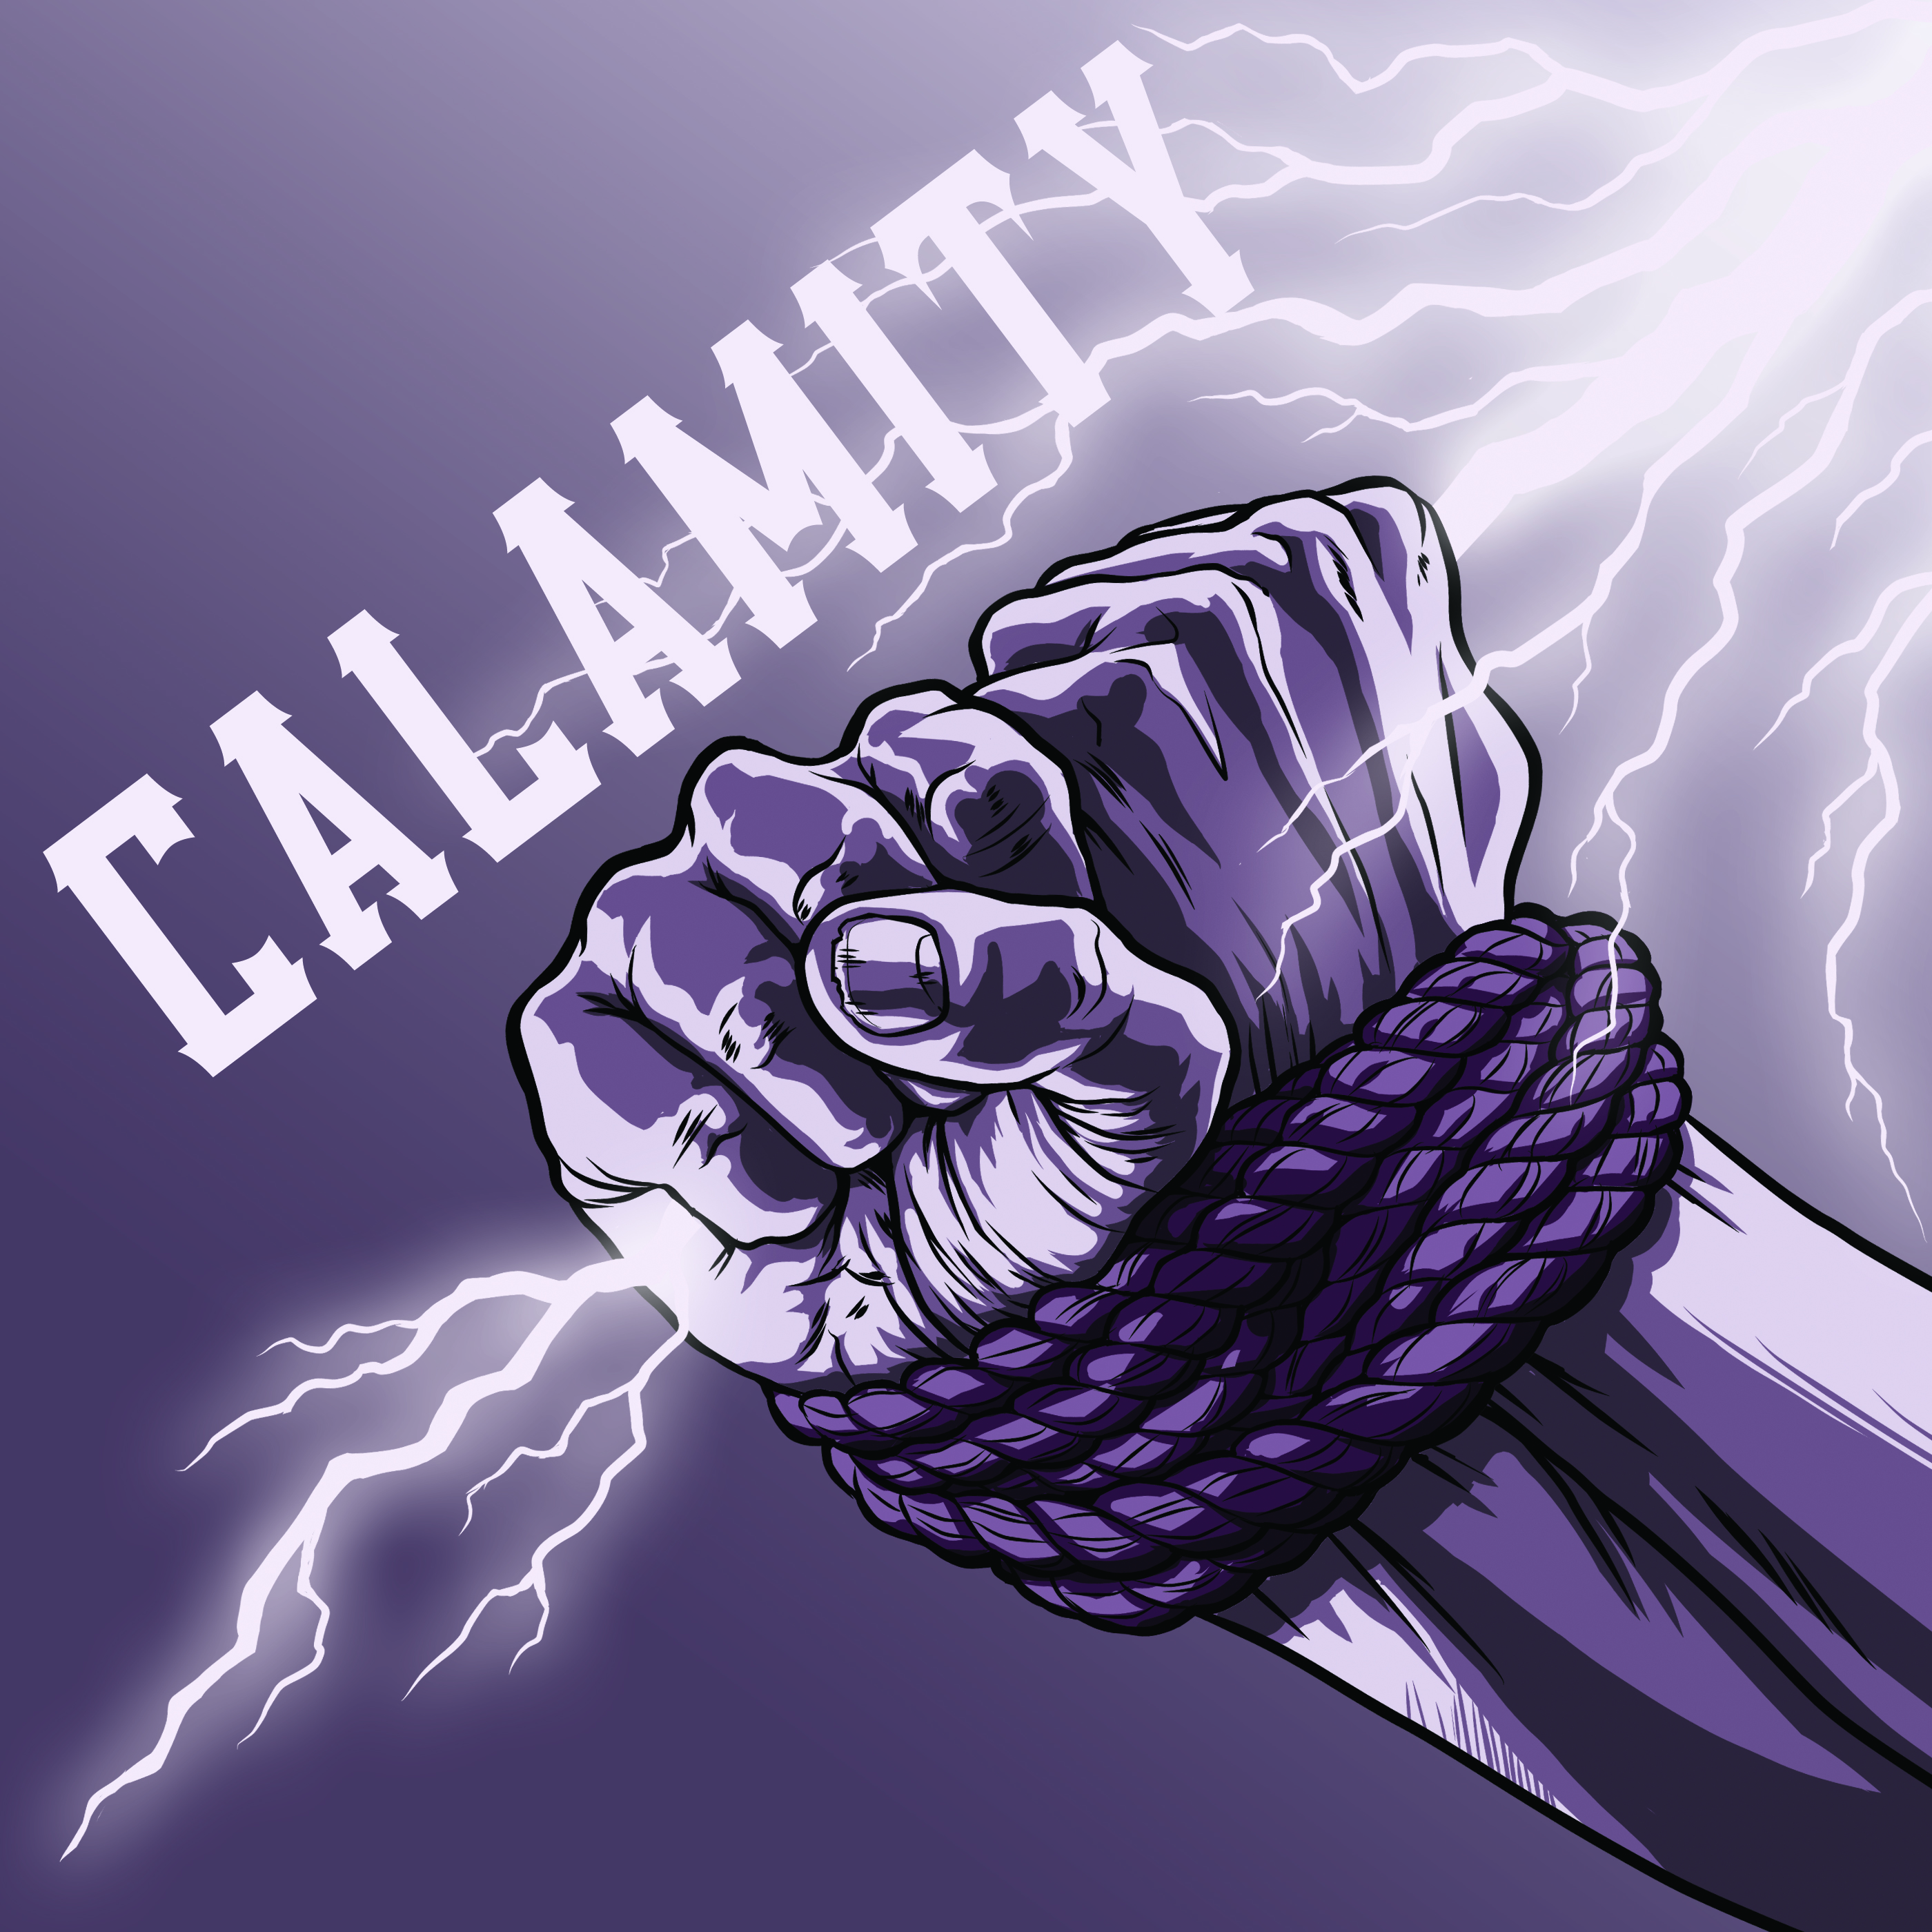 Calamity EP6 Bullet Train Part 2